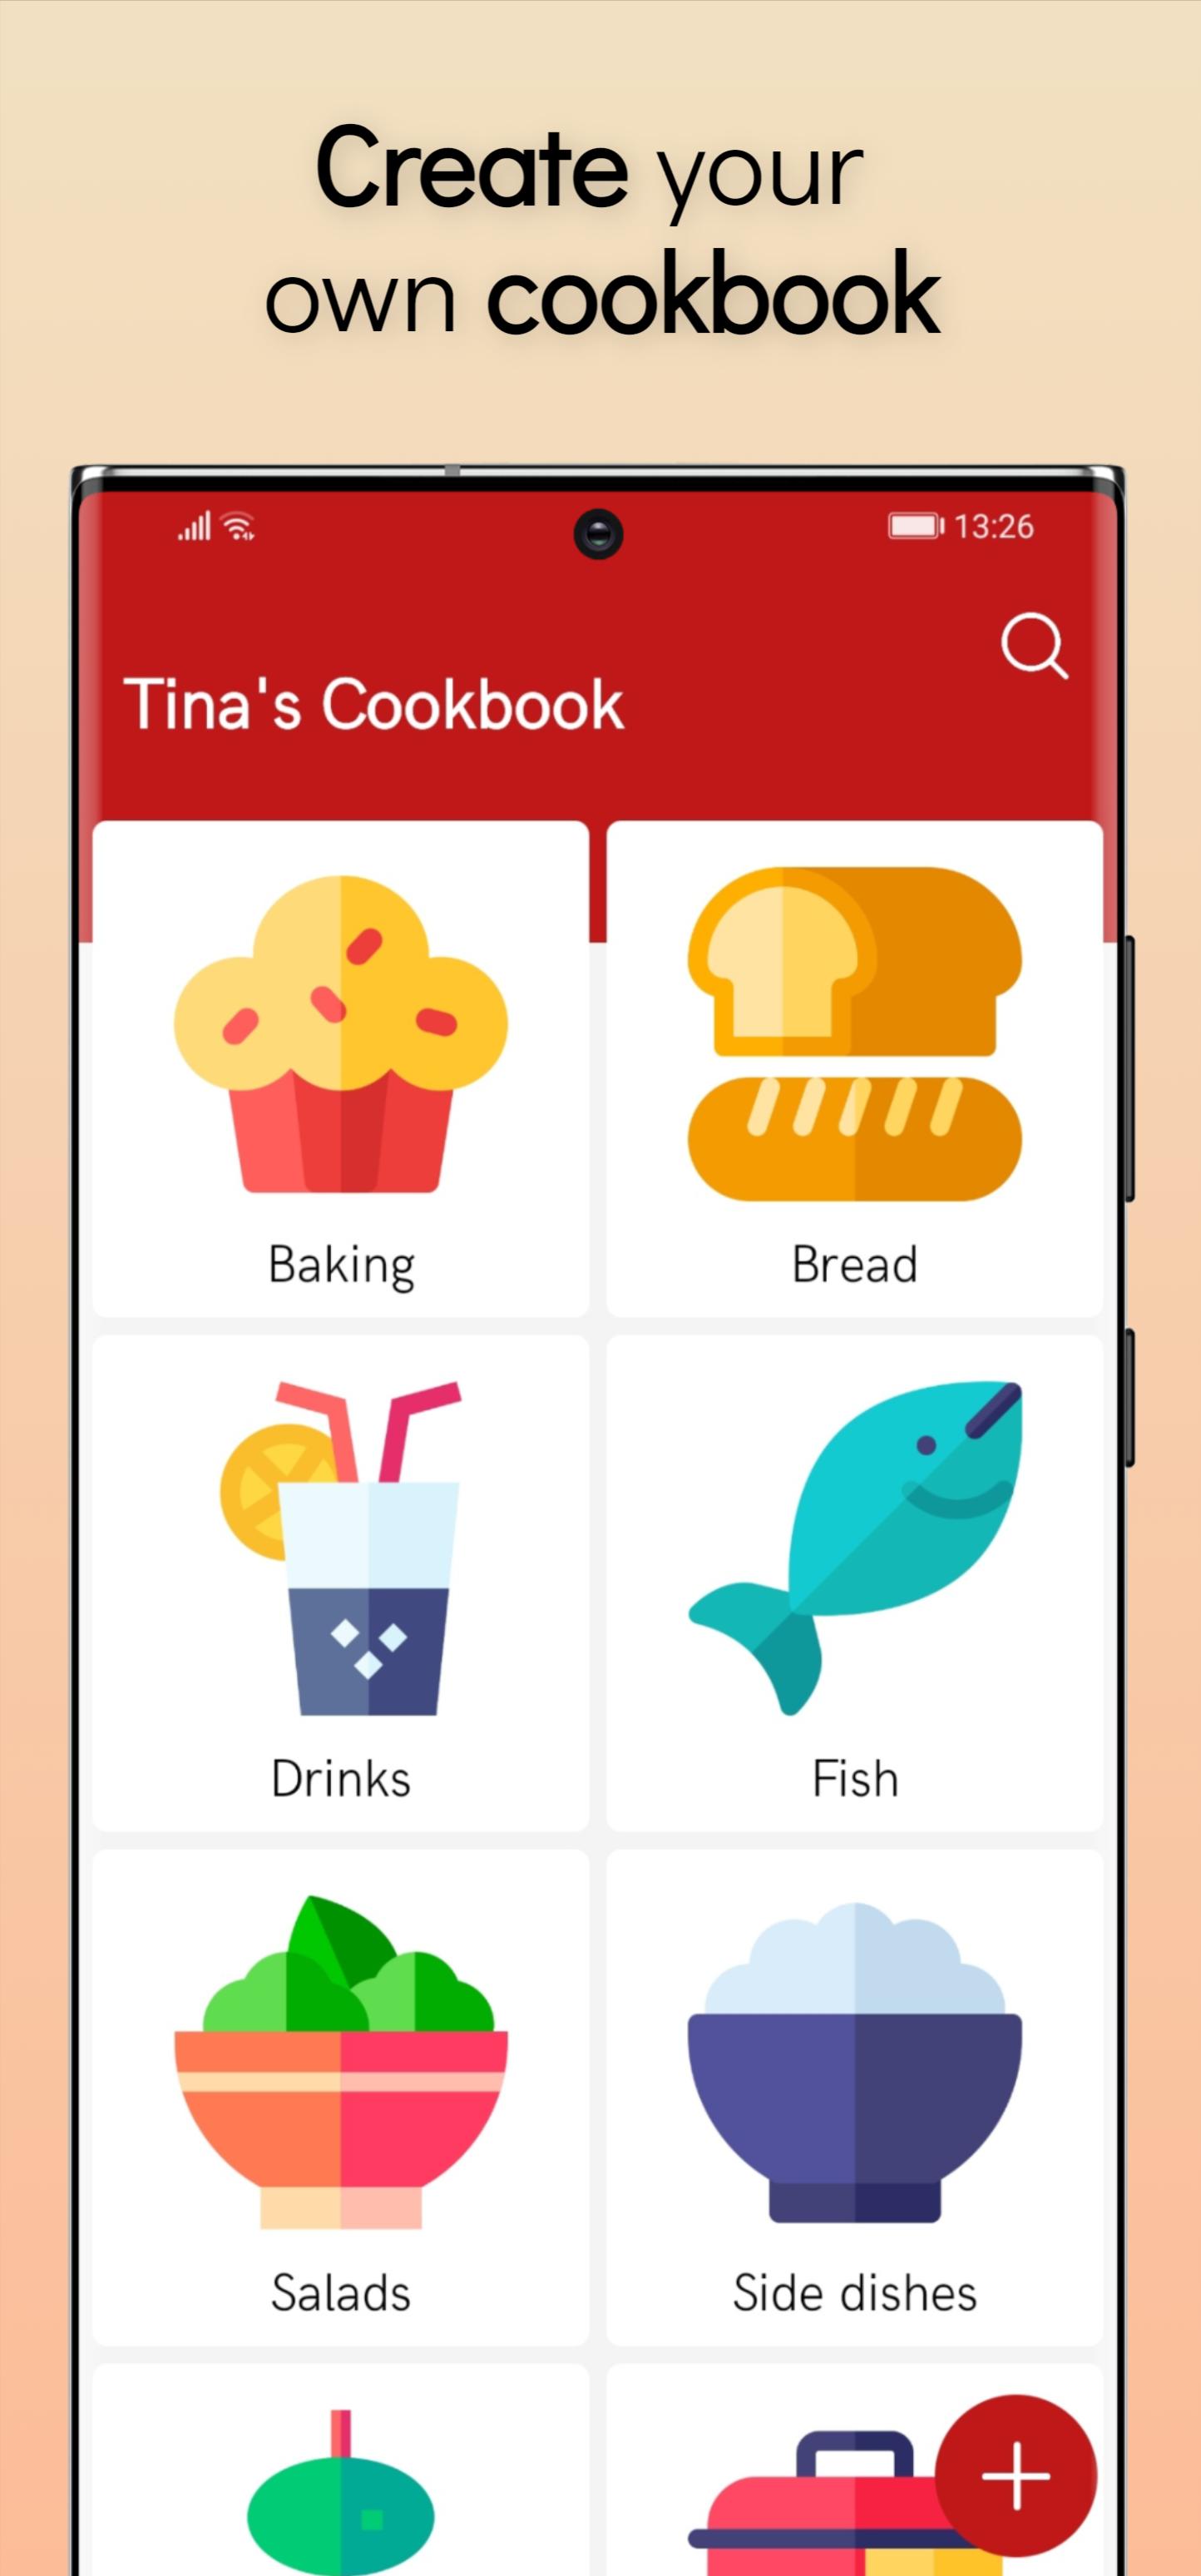 My cooking book. My Cookbook. Android Studio Cookbook.